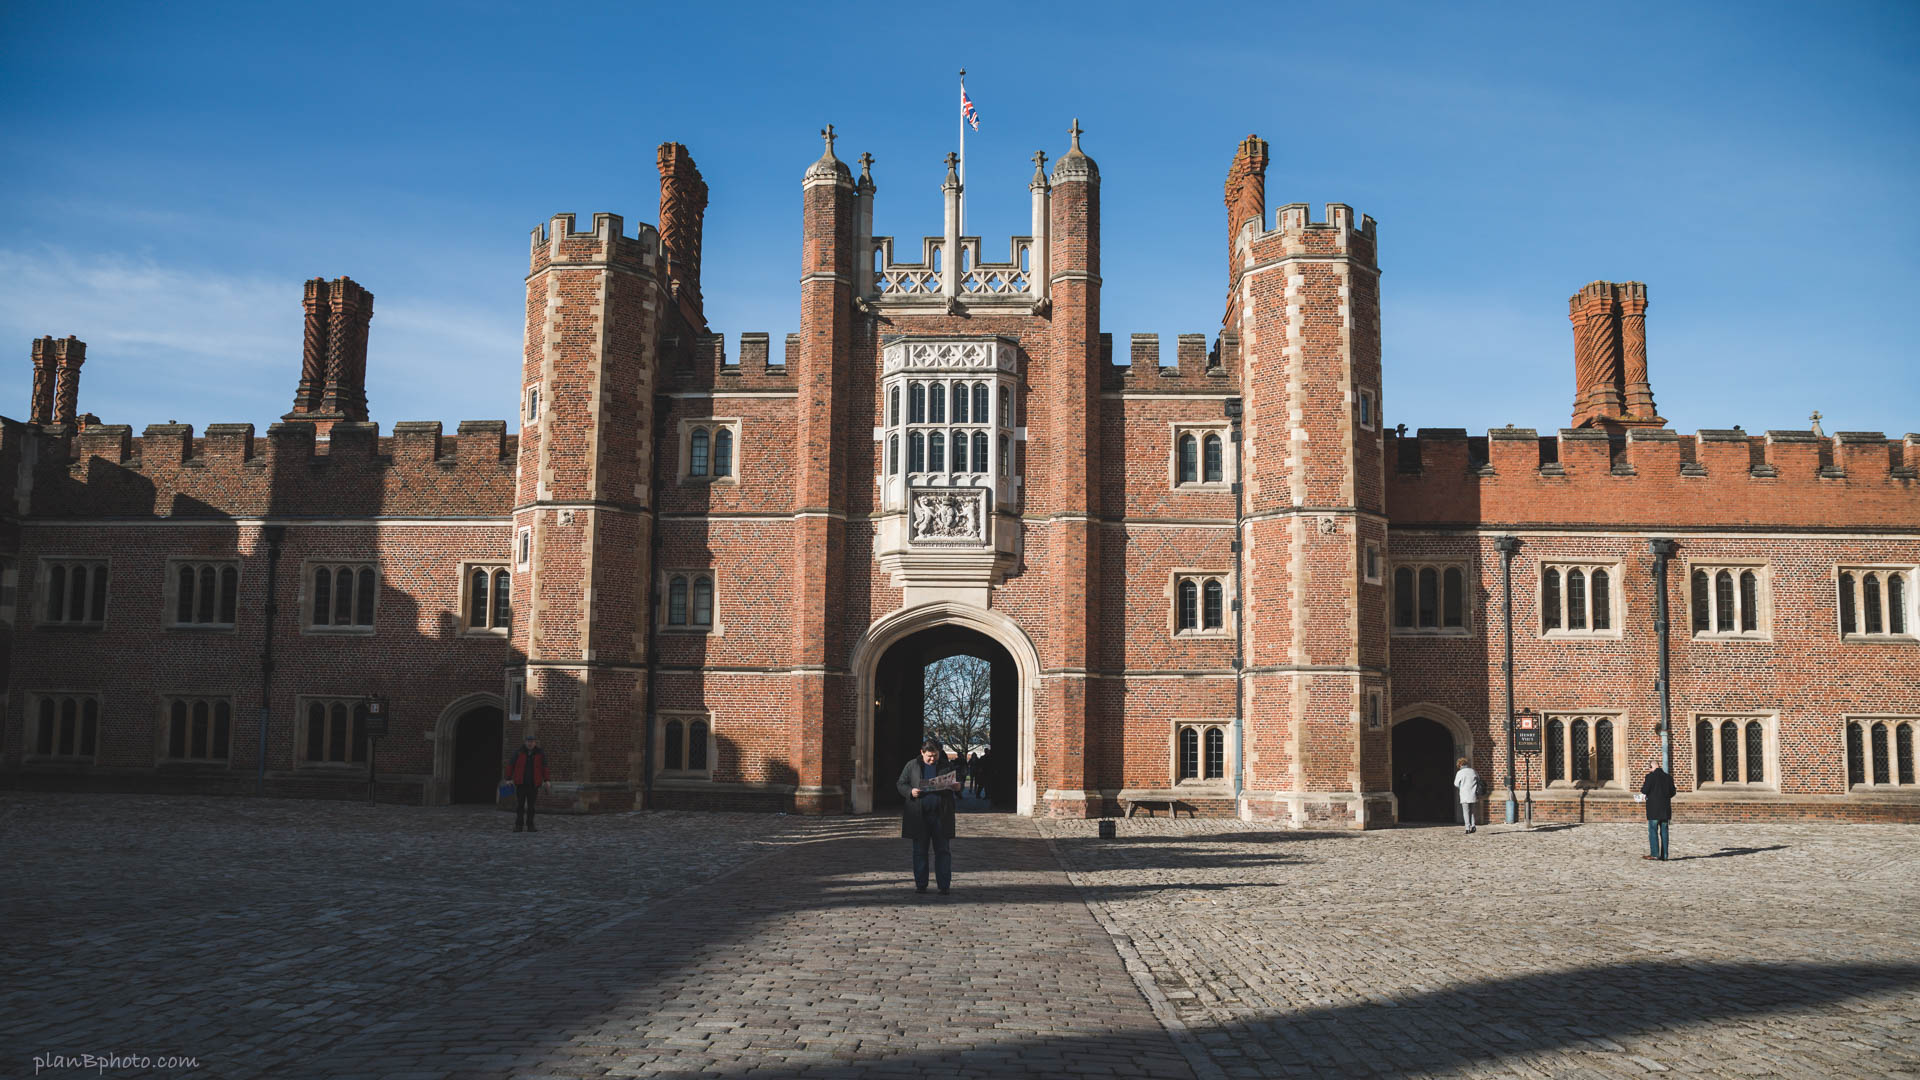 Hampton court palace